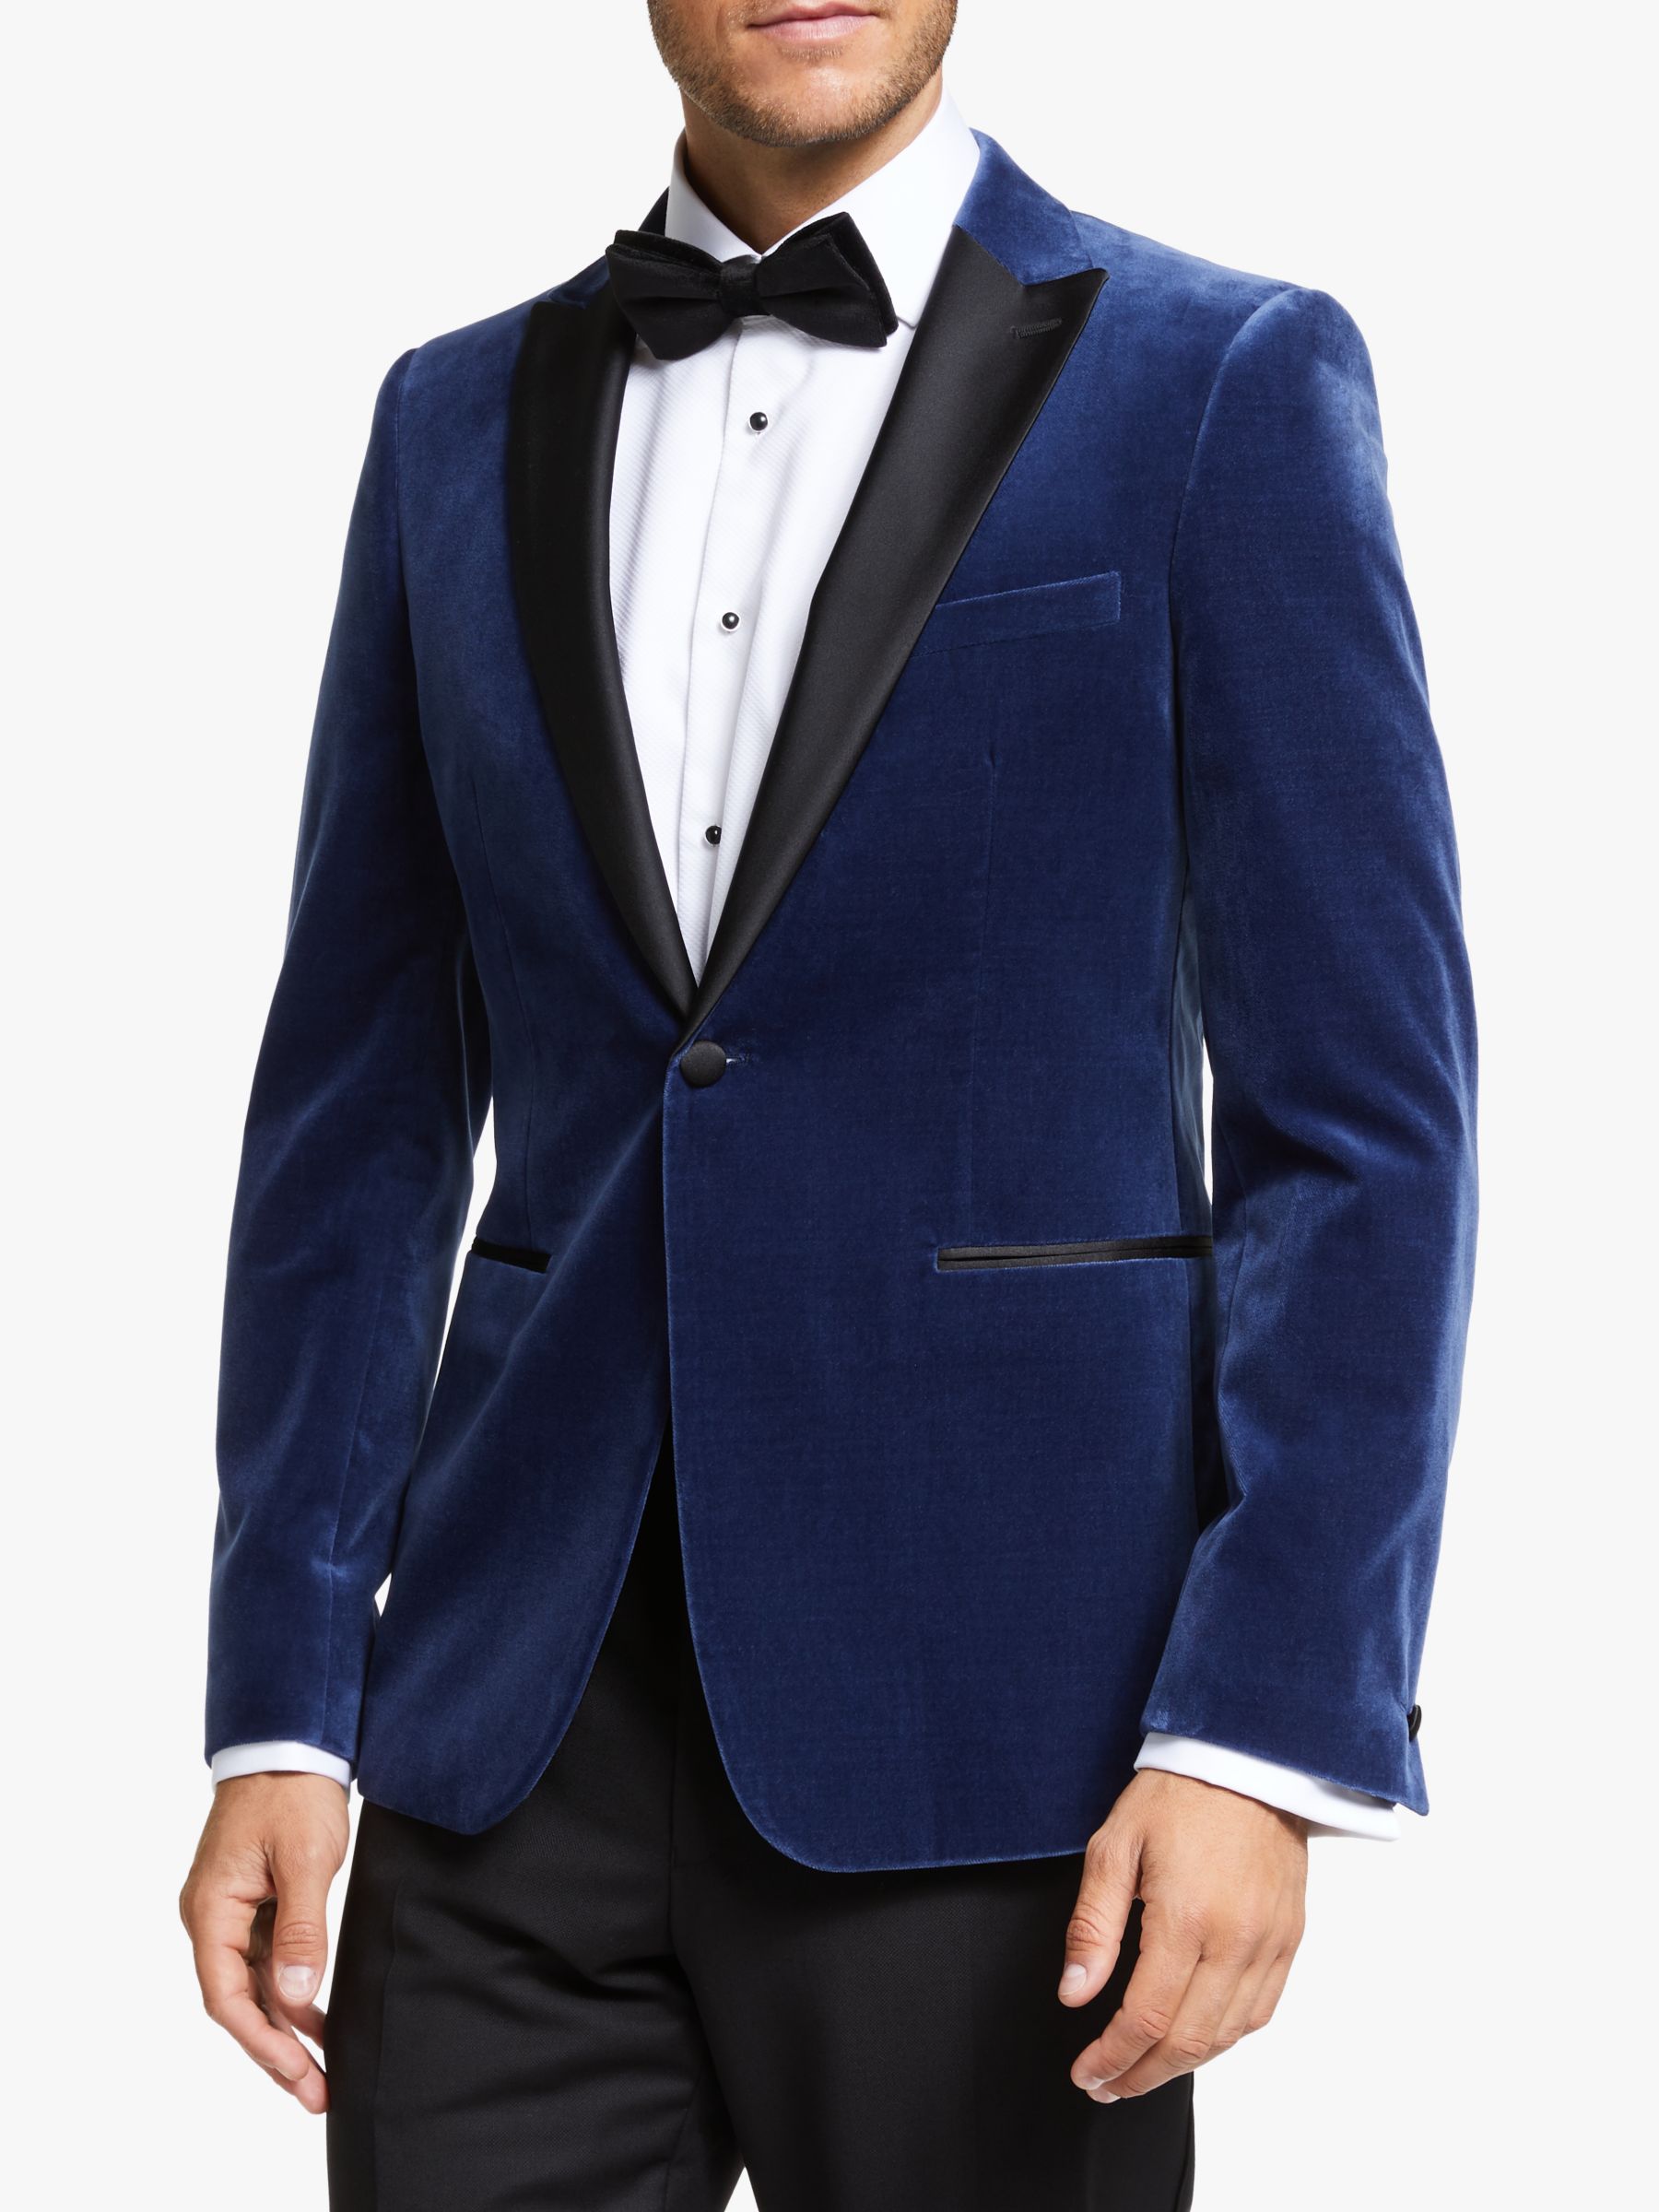 John Lewis & Partners Italian Velvet Peak Lapel Slim Fit Dress Suit Jacket, Blue